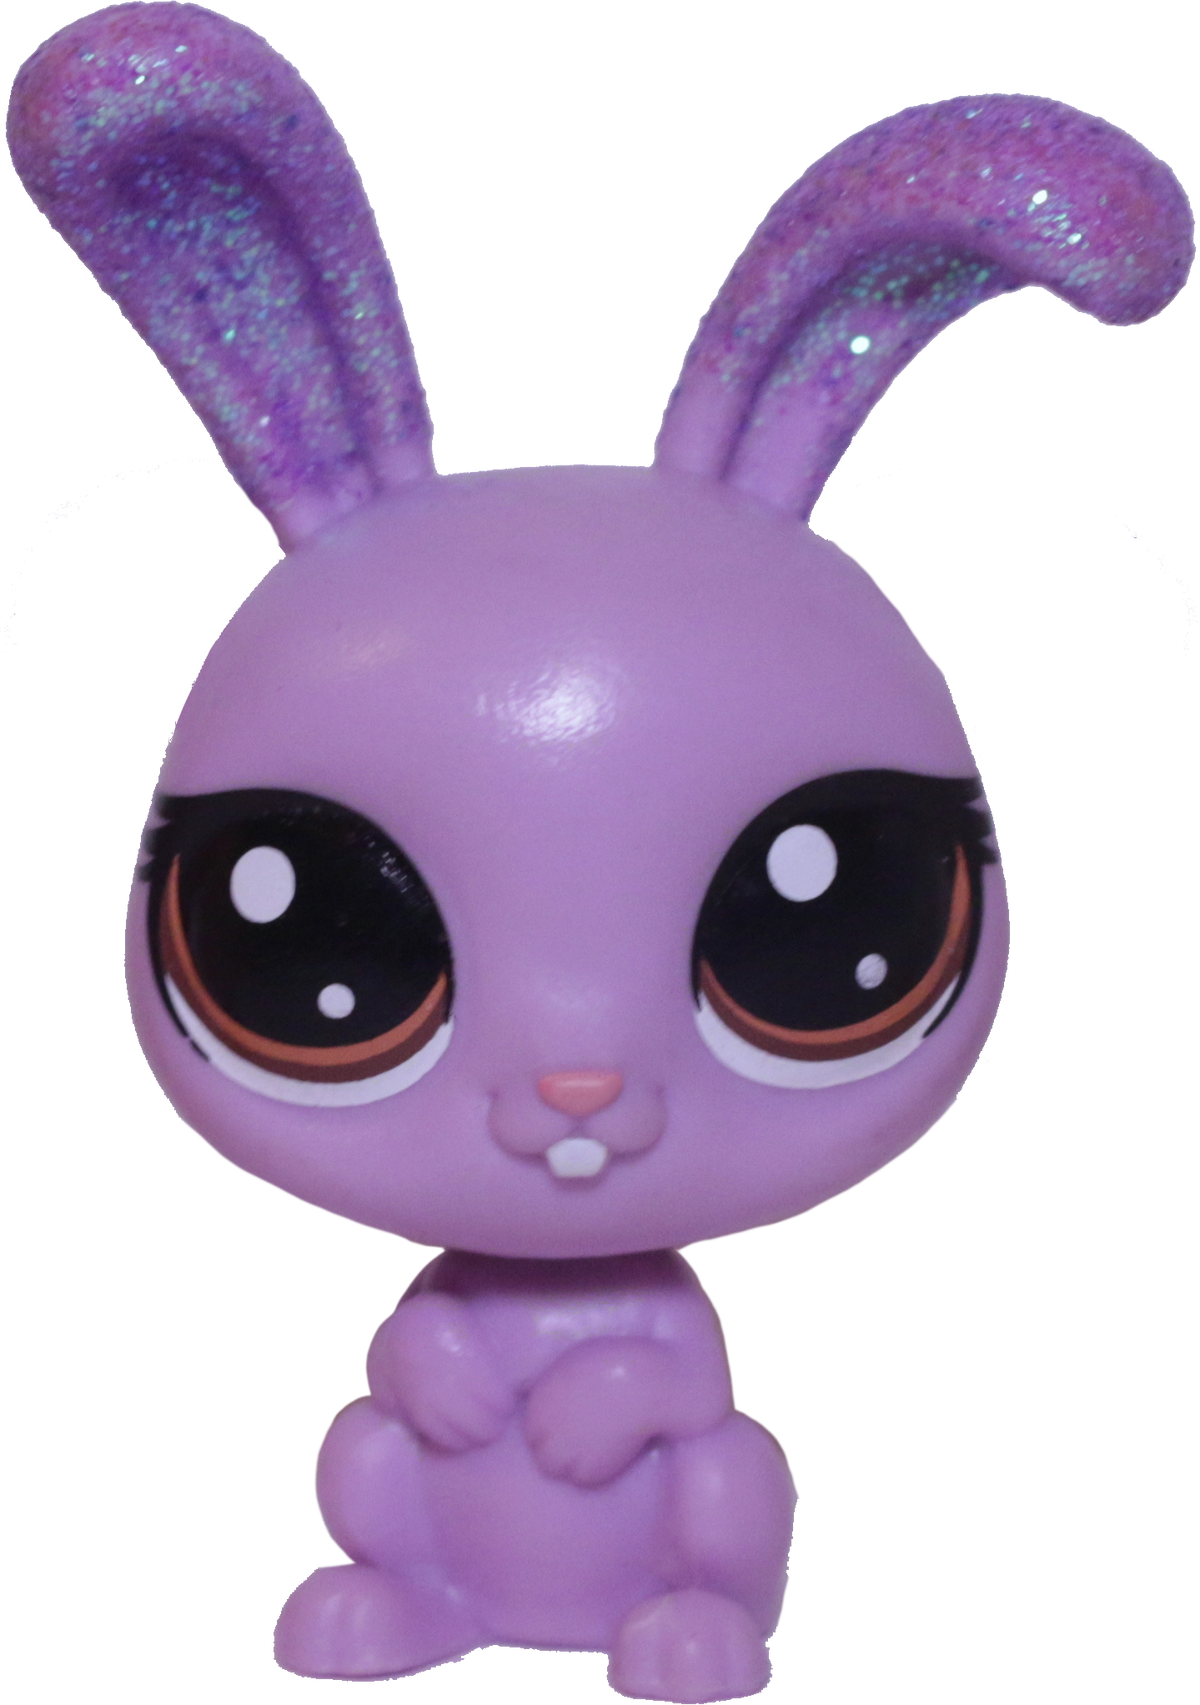 #2-S16 Rabbit "Gleamy Bunnyton"